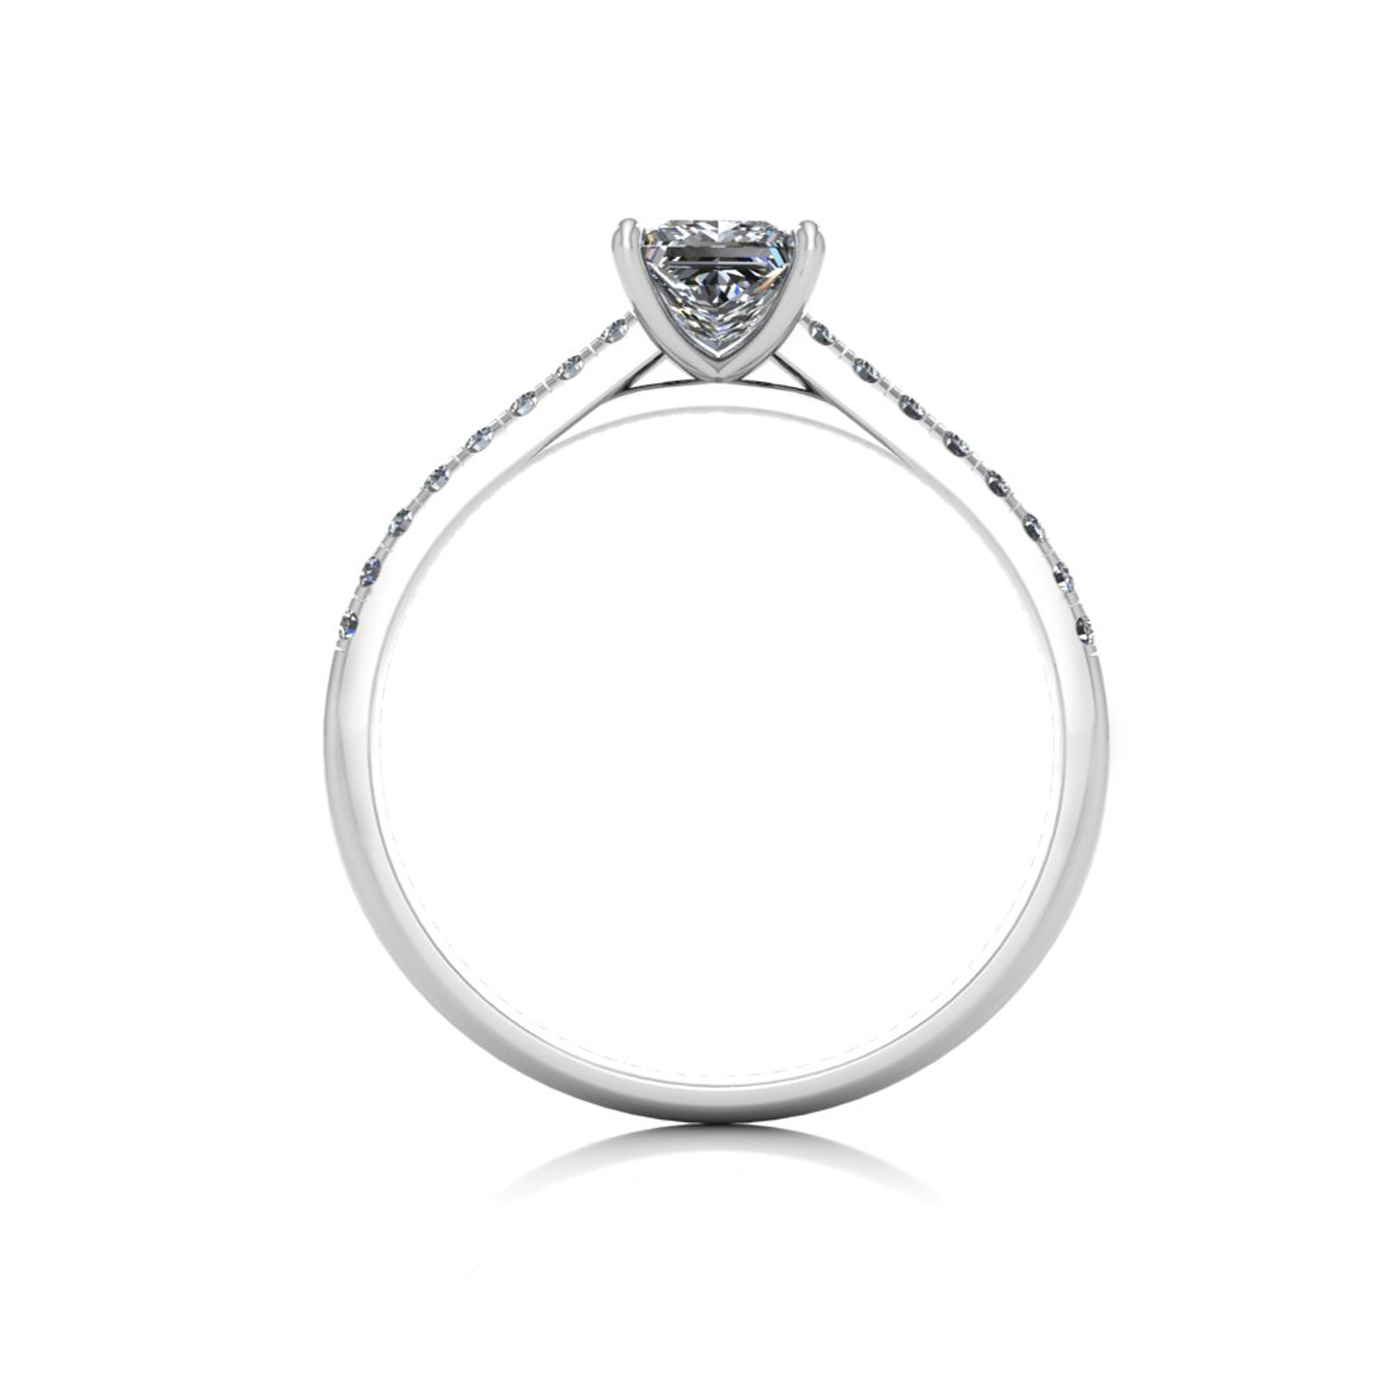 18k white gold 0,50 ct 4 prongs princess cut diamond engagement ring with whisper thin pavÉ set band